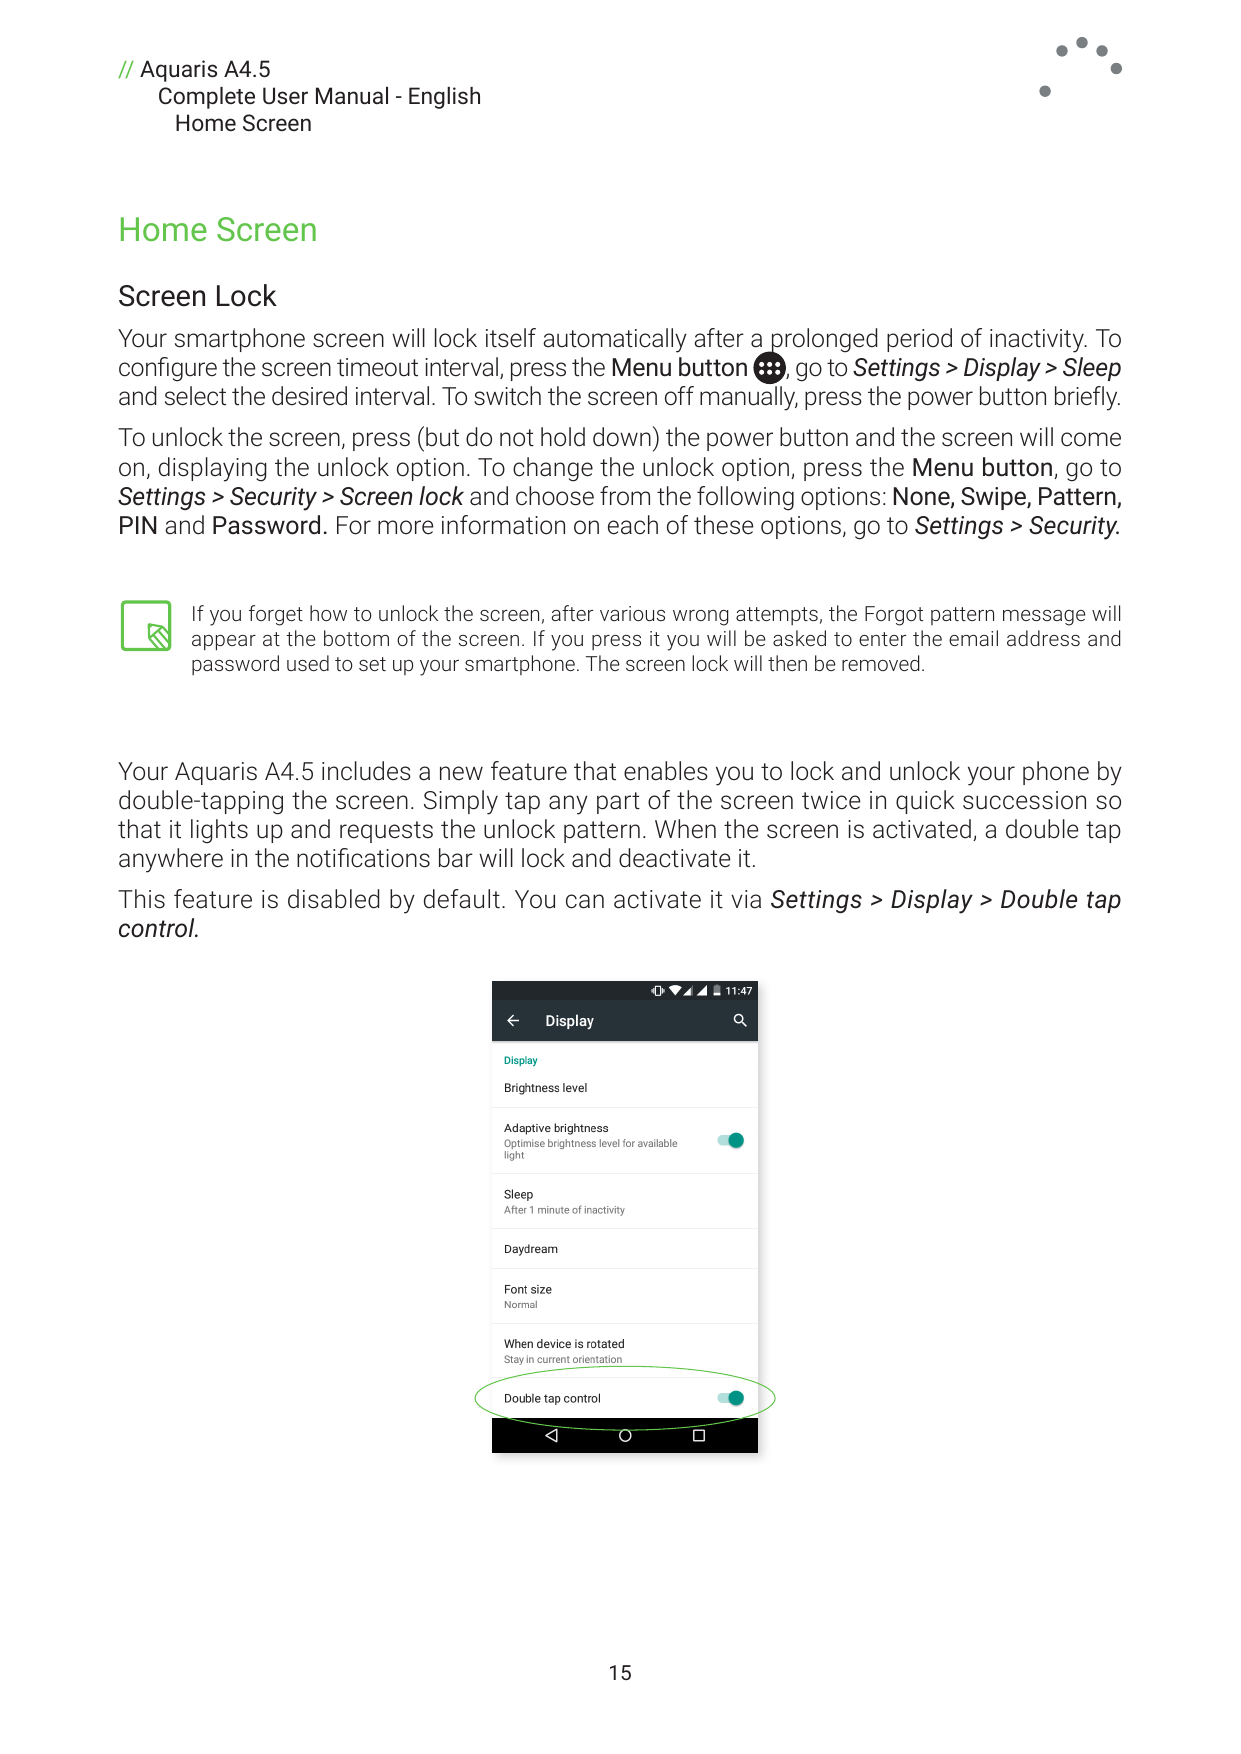 // Aquaris A4.5Complete User Manual - EnglishHome ScreenHome ScreenScreen LockYour smartphone screen will lock itself automatica